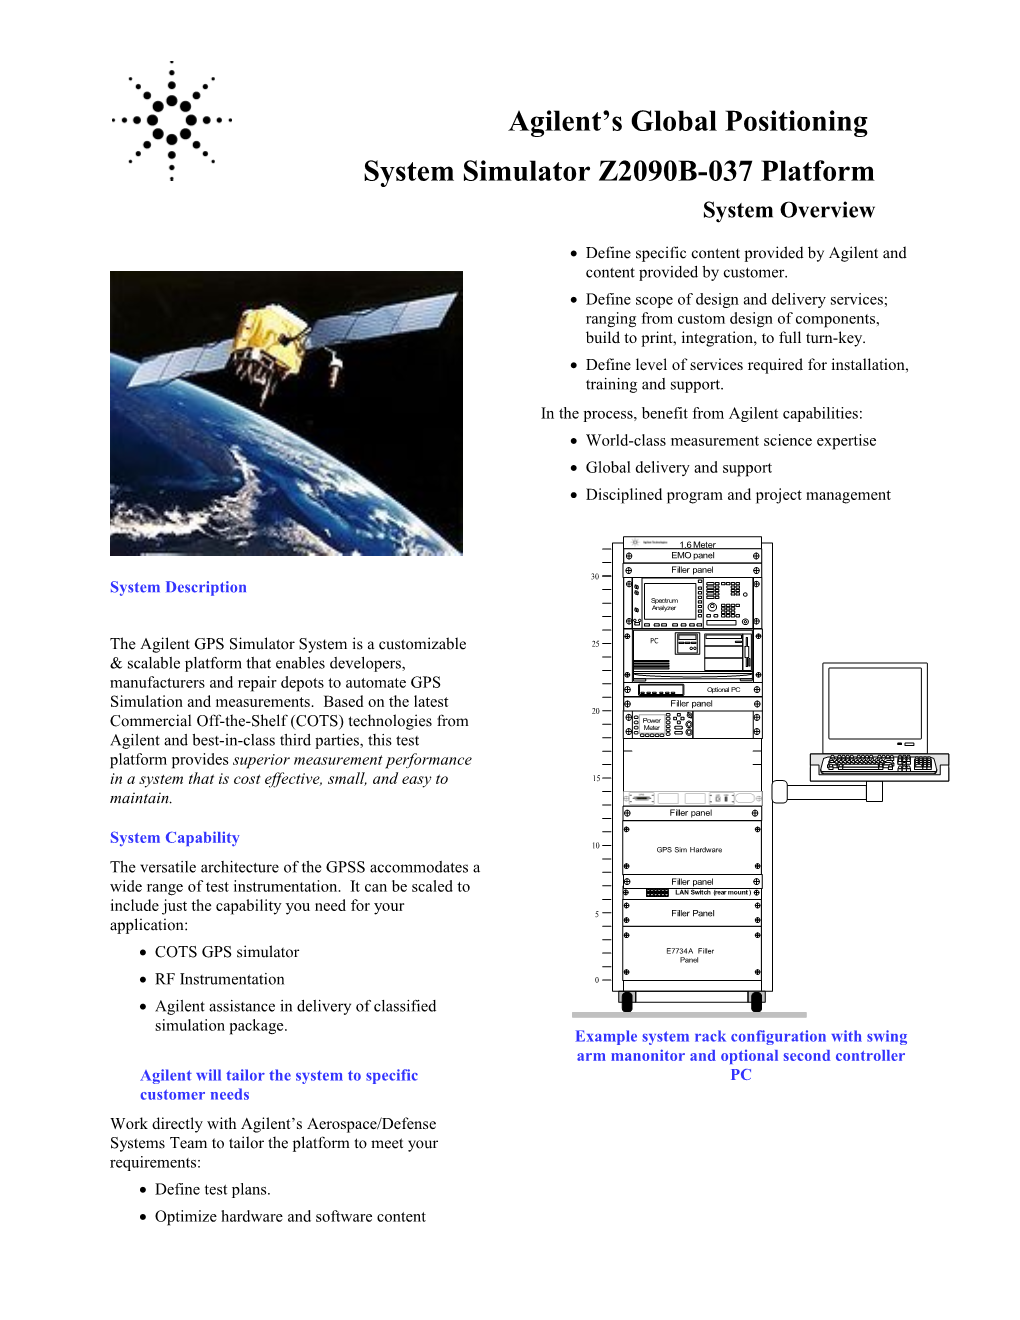 System Simulator Z2090B-037 Platform